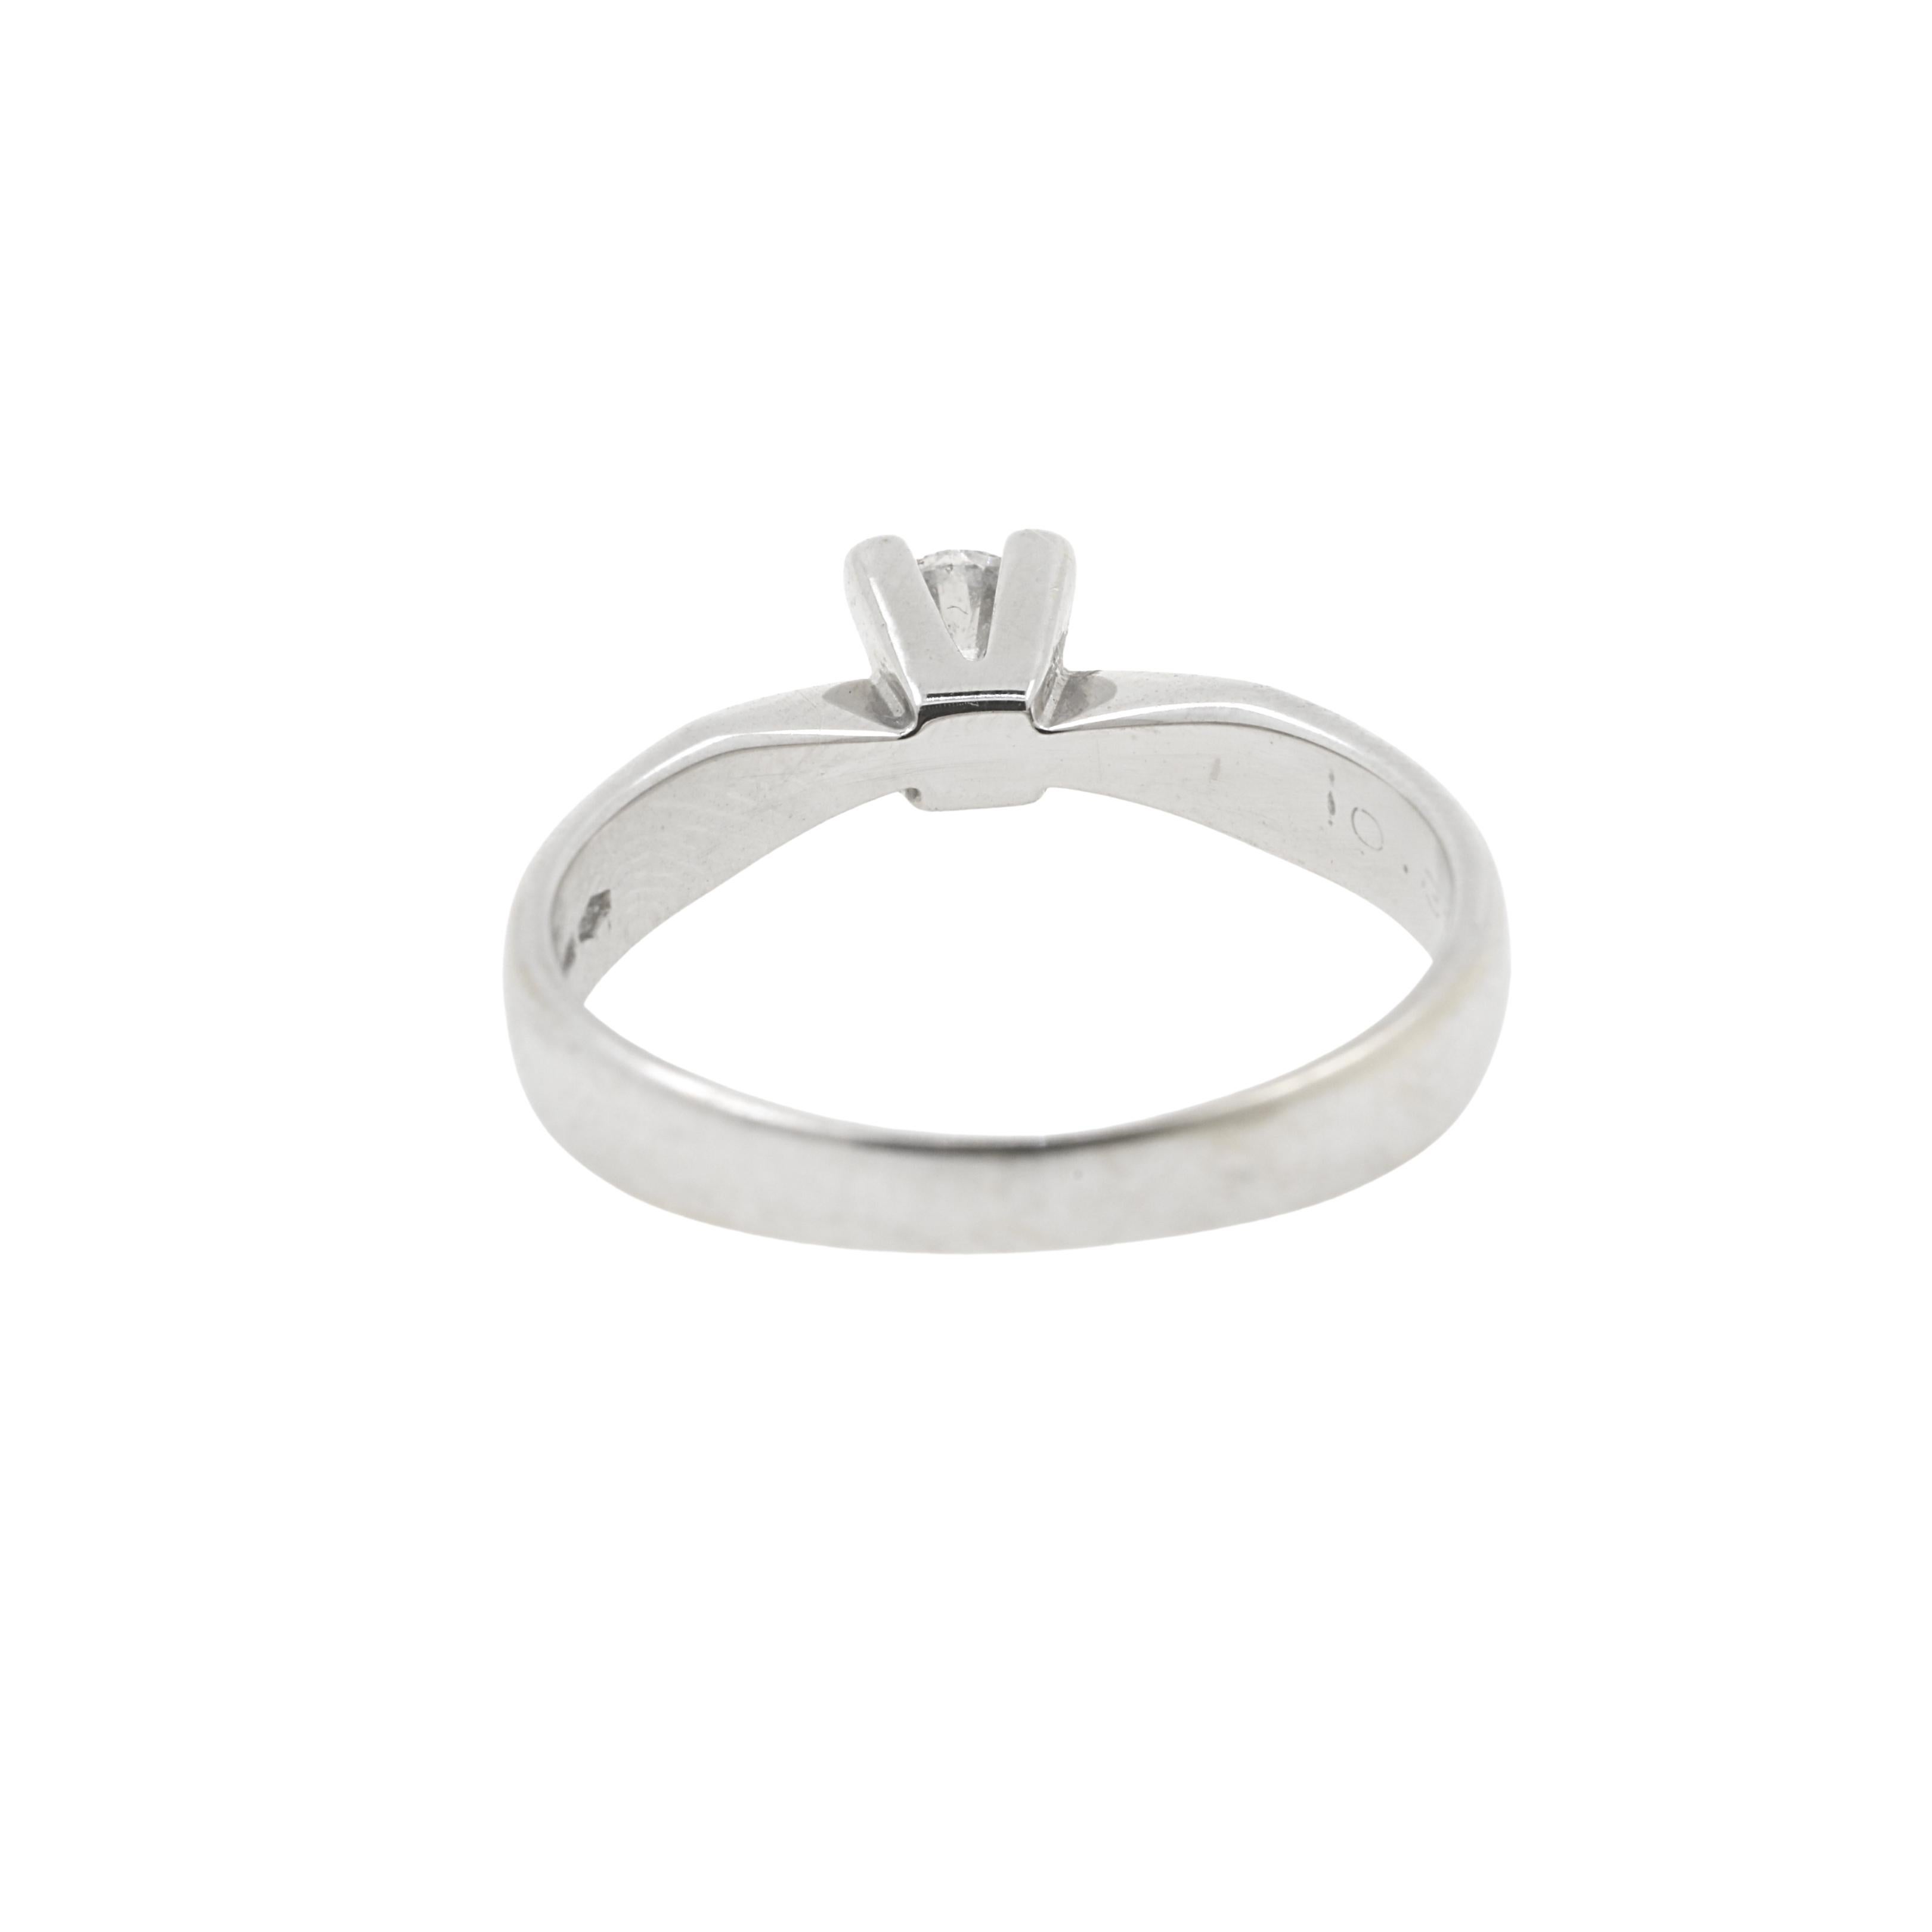 Round Cut AIG Certified 0.30 Carat Diamond Engagement Ring on 18K White Gold